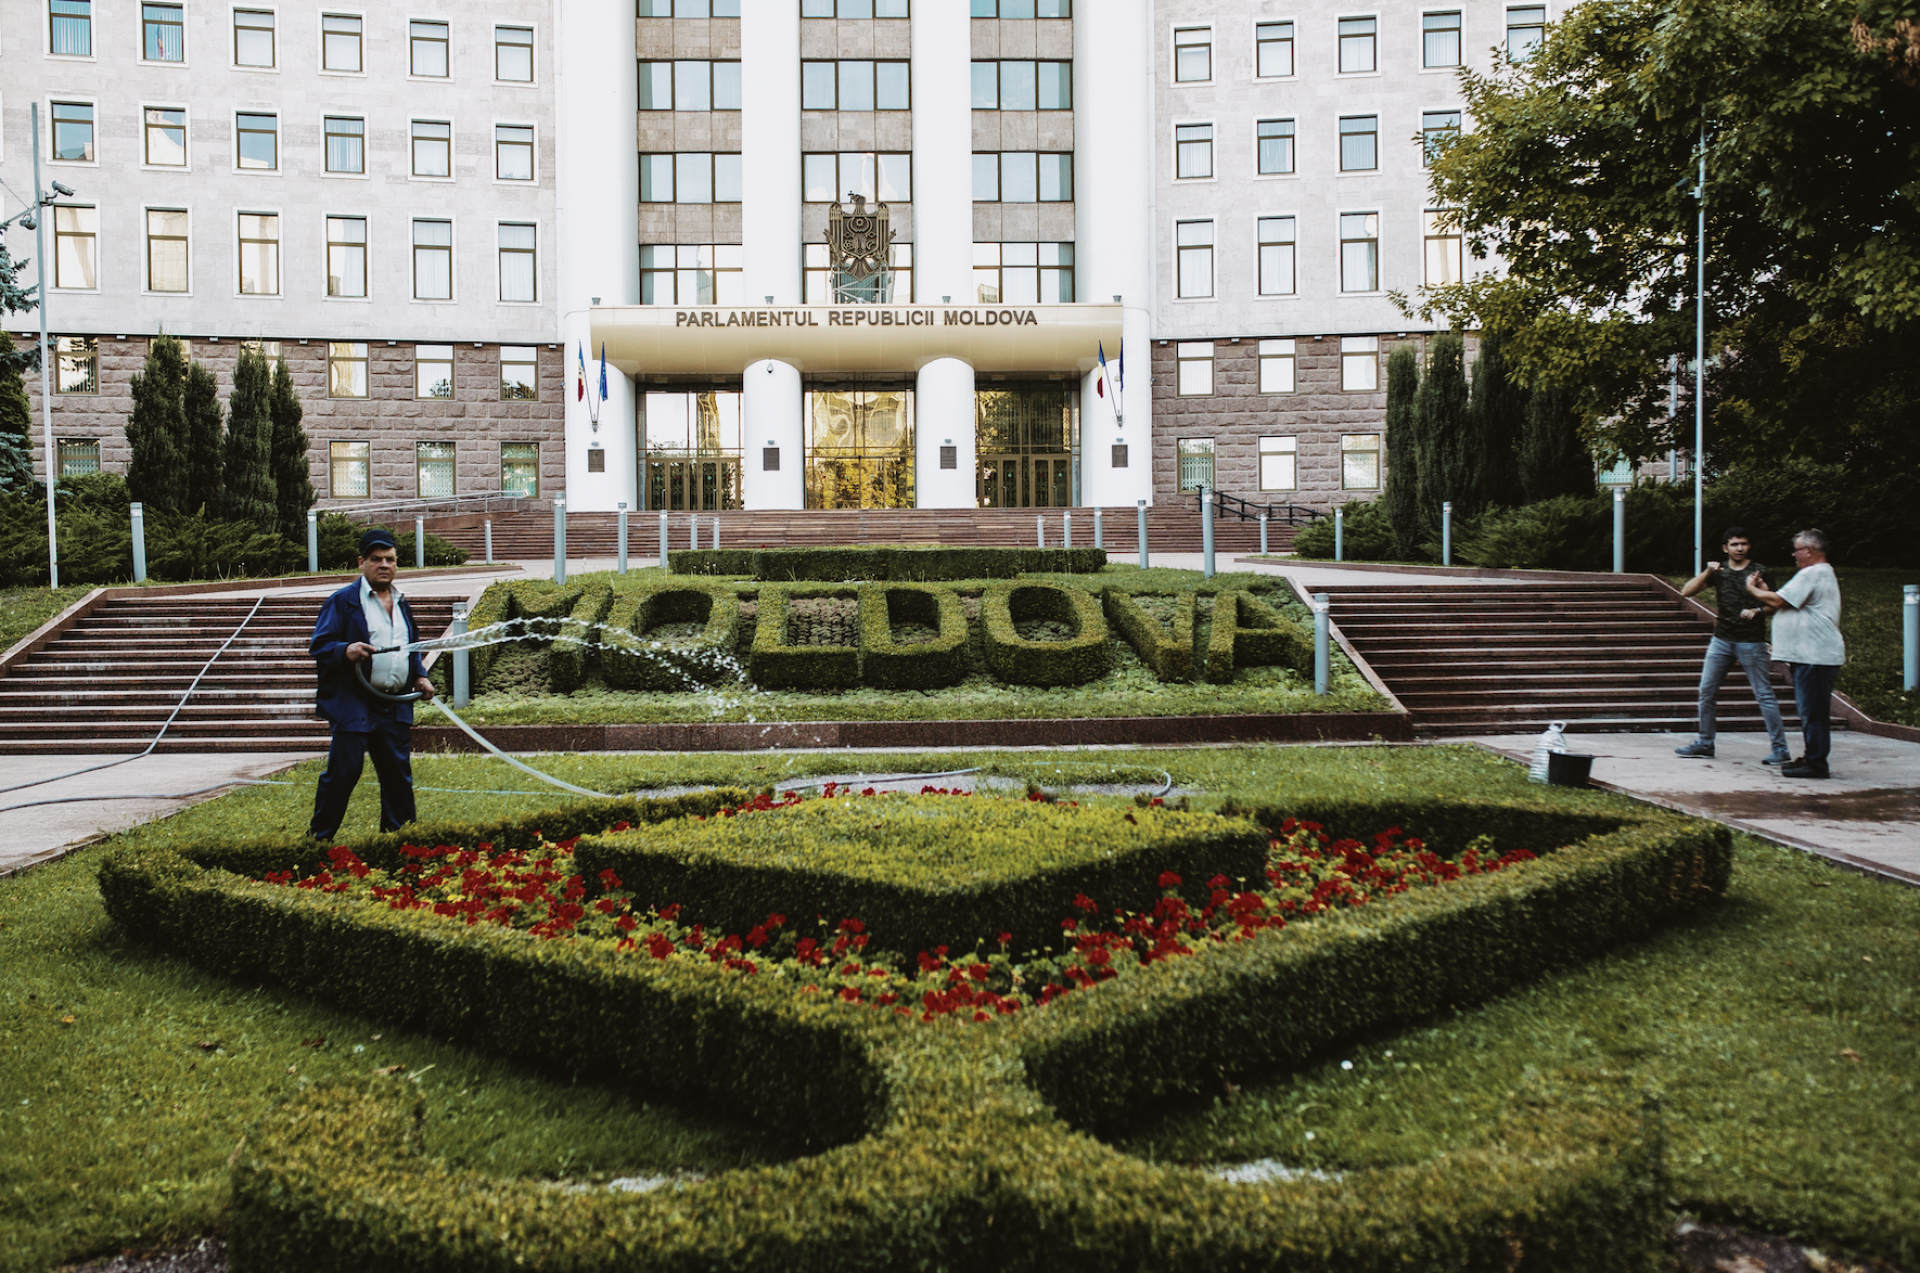 Image - Ukrainian man watering garden in front of Moldova's parliament